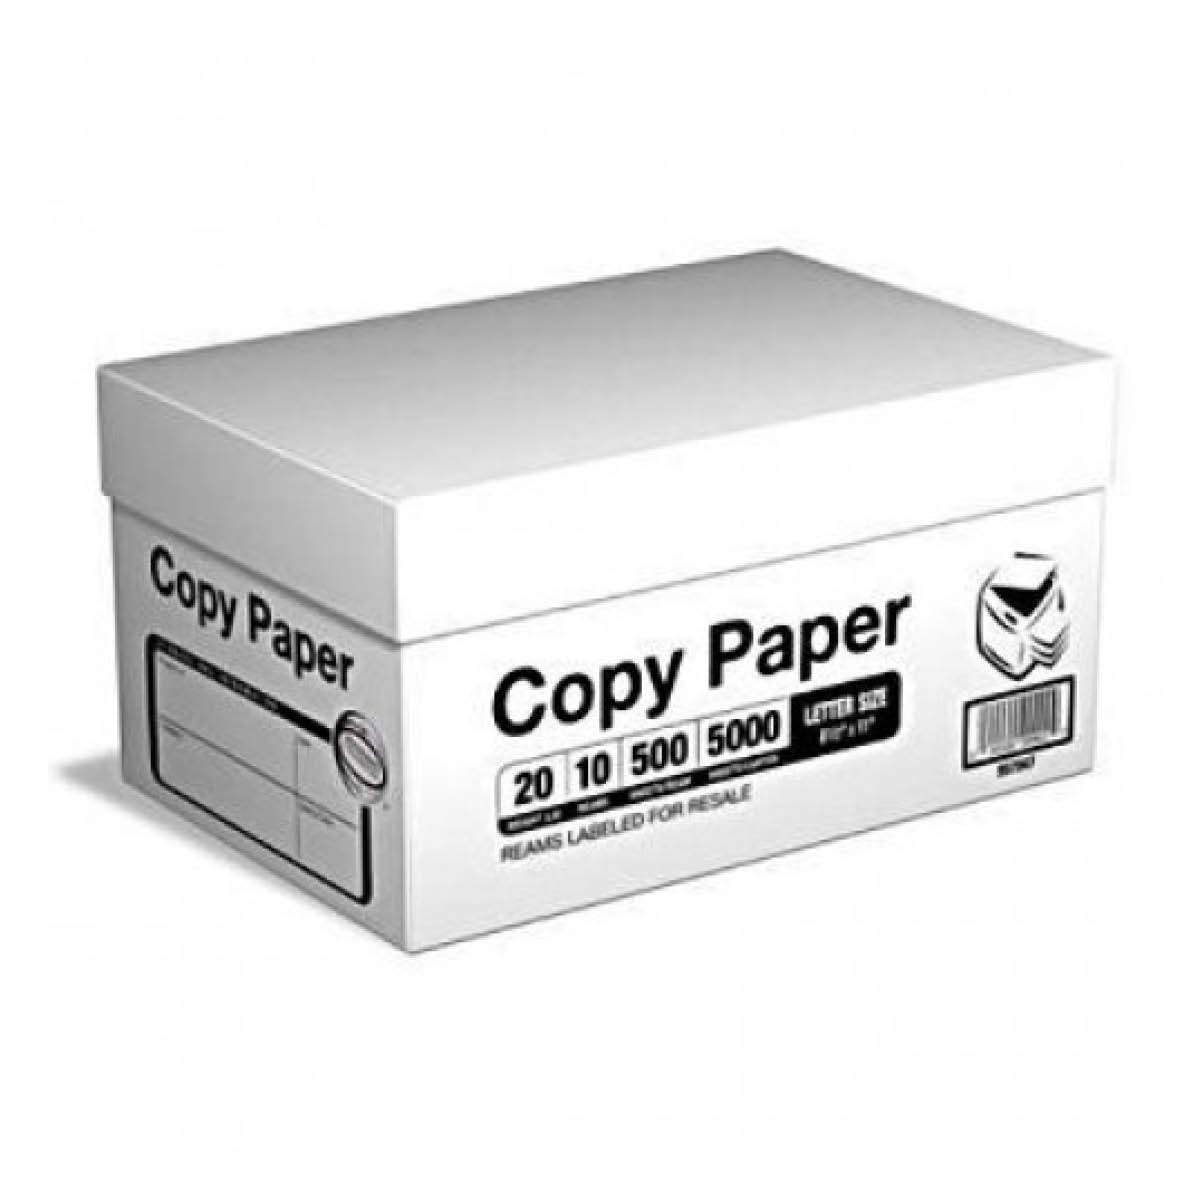 Paperline Copy Paper, Case of 5000 Sheets